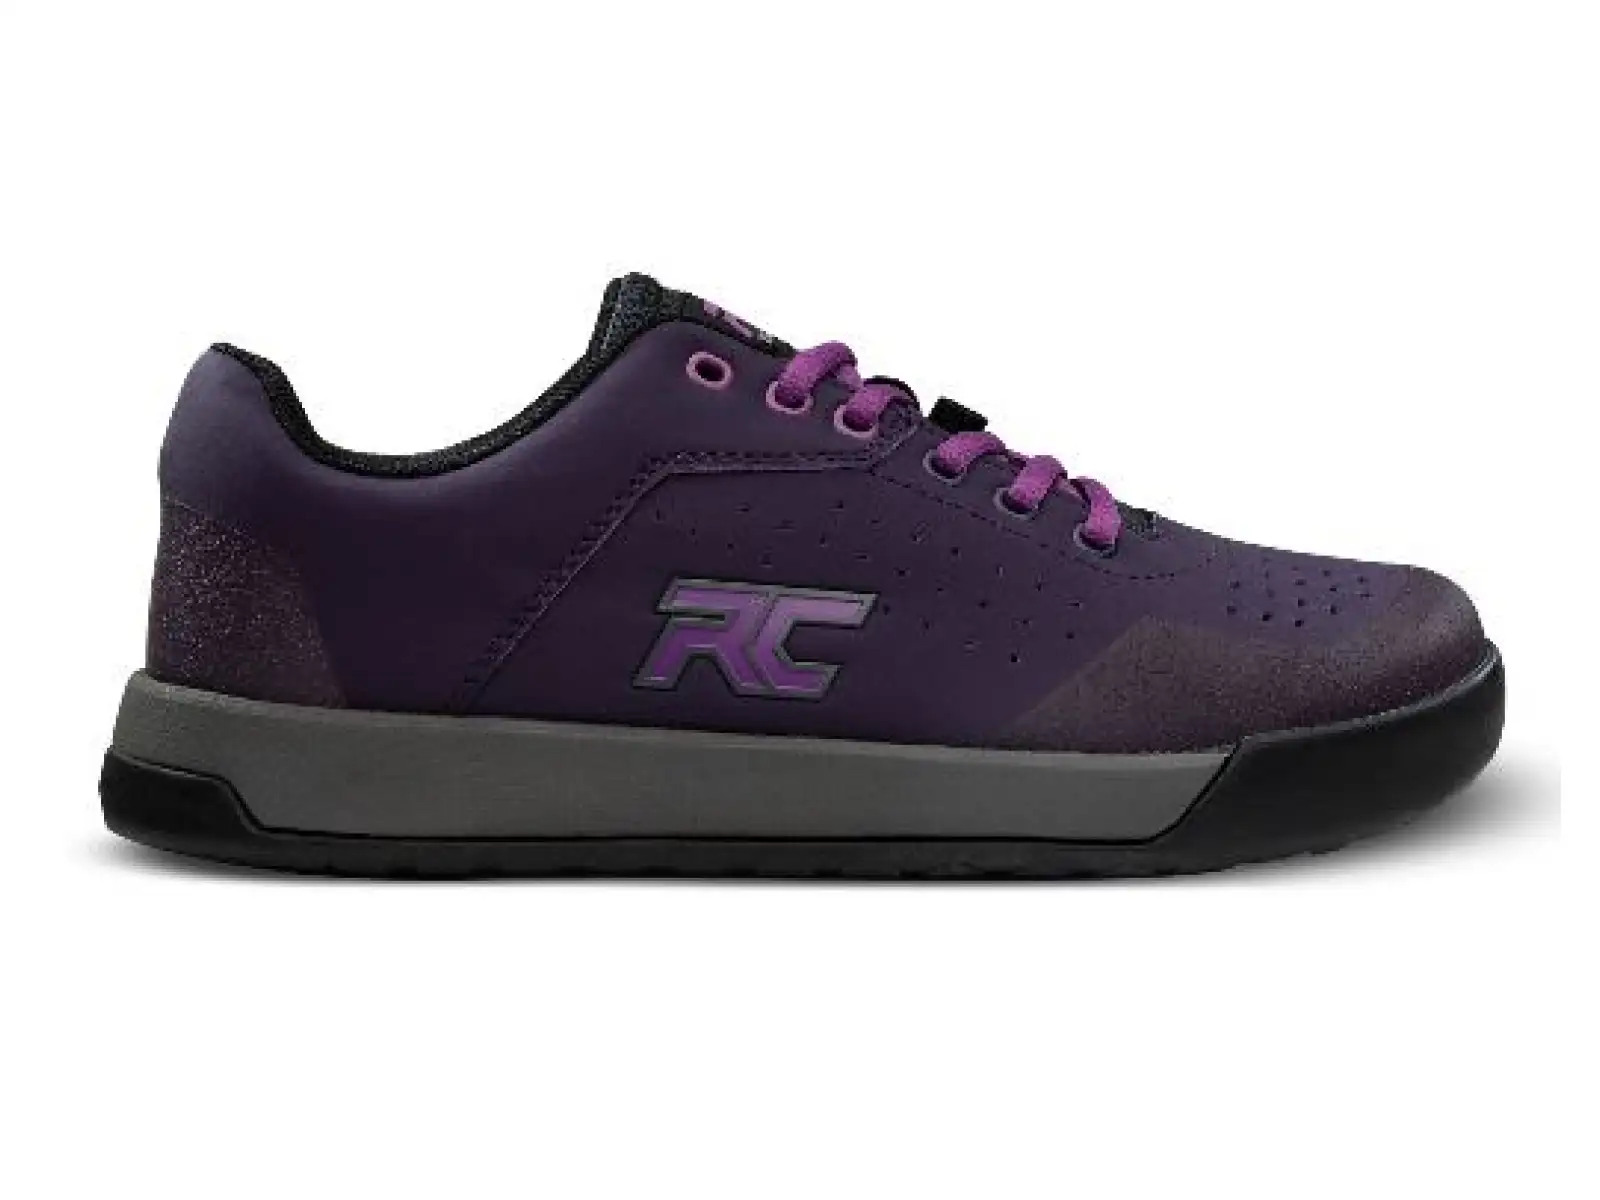 Ride Concepts Hellion dámské boty dark purple/purple